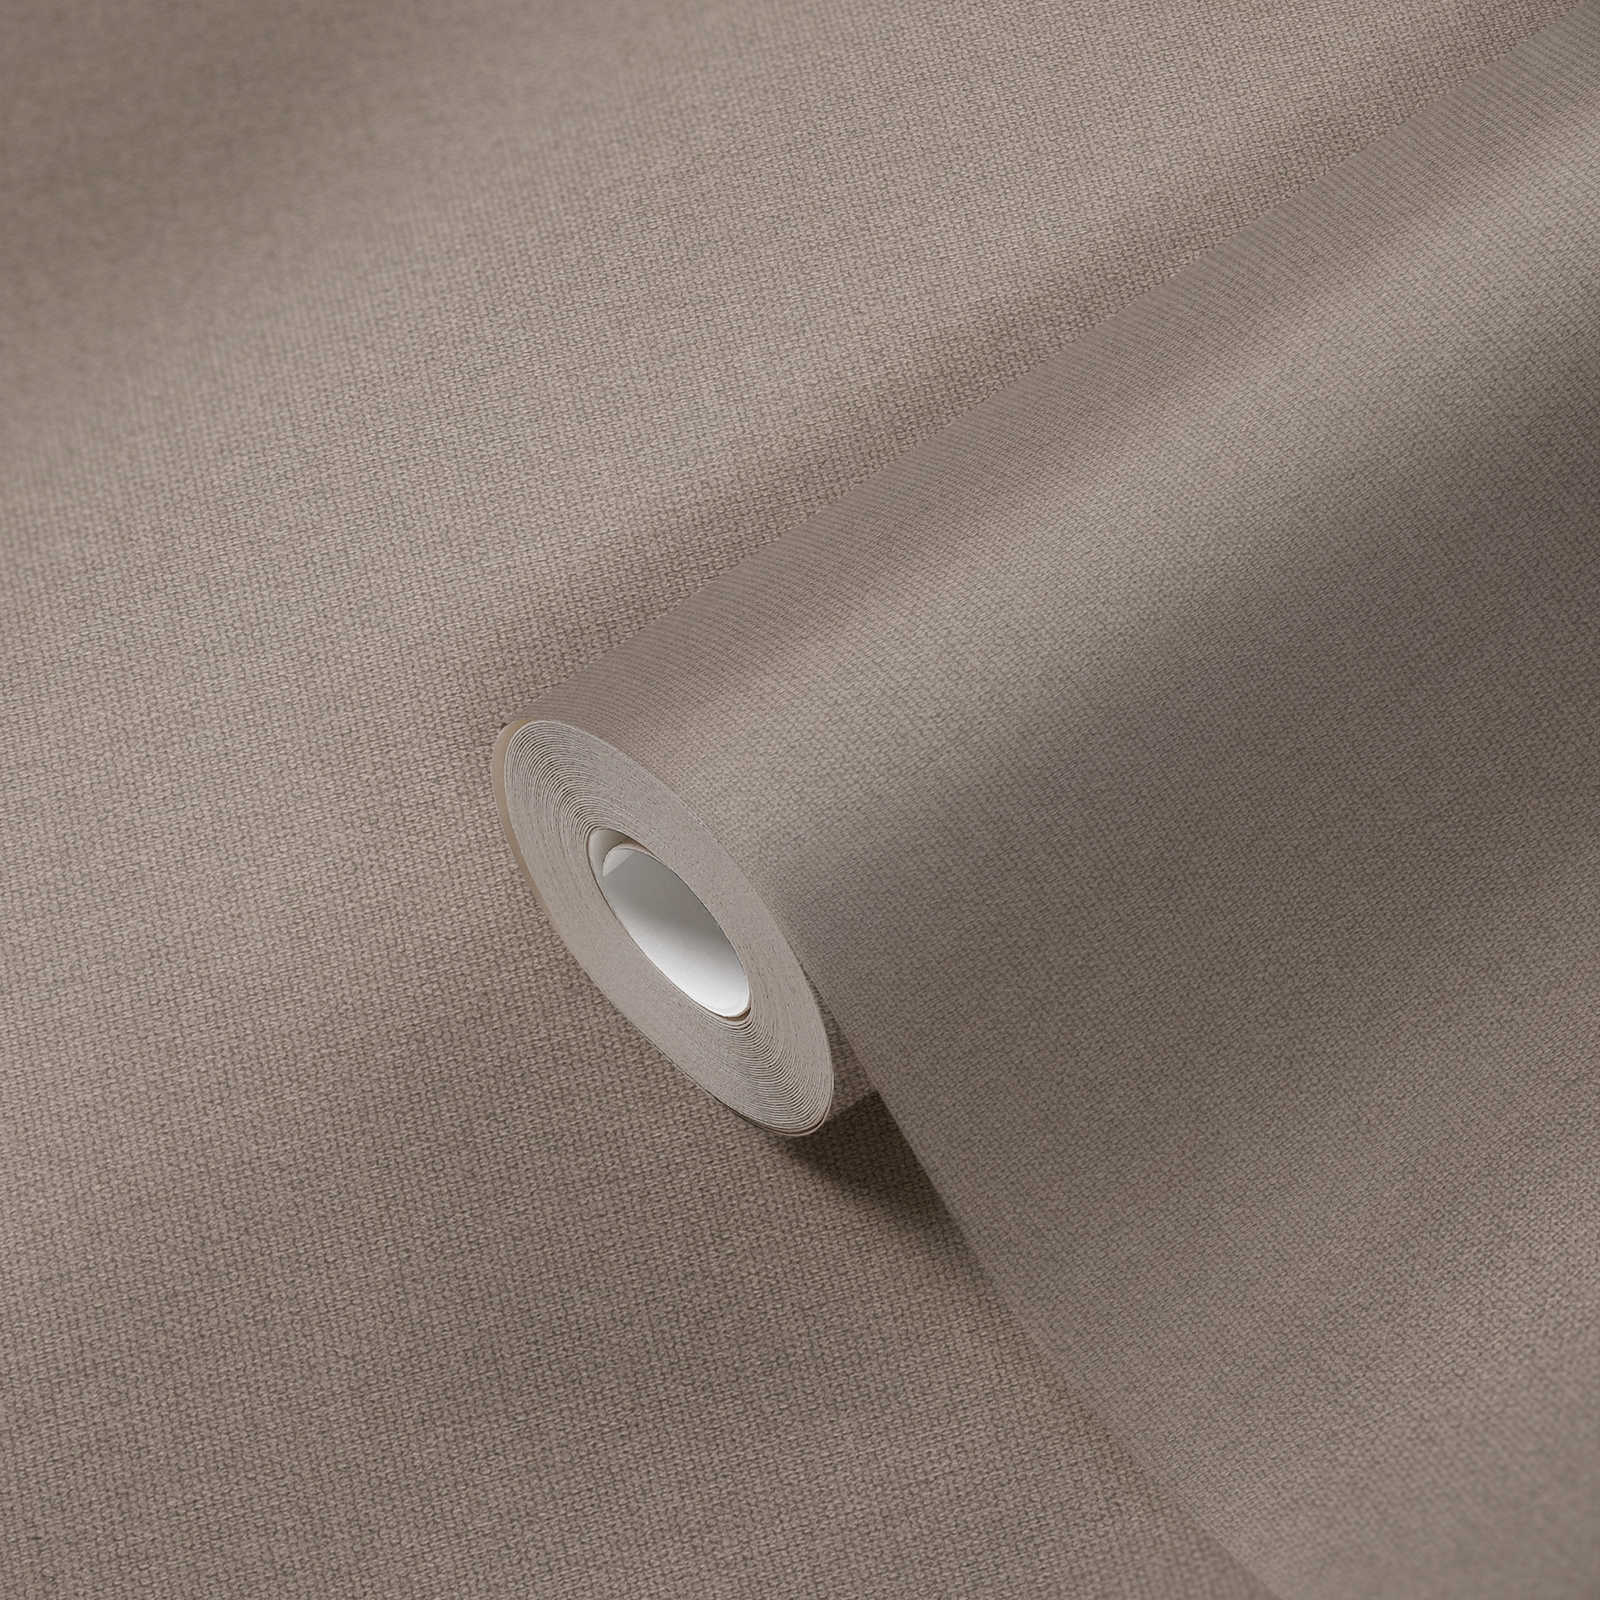             Wallpaper linen look with structural details, plain - grey, beige
        